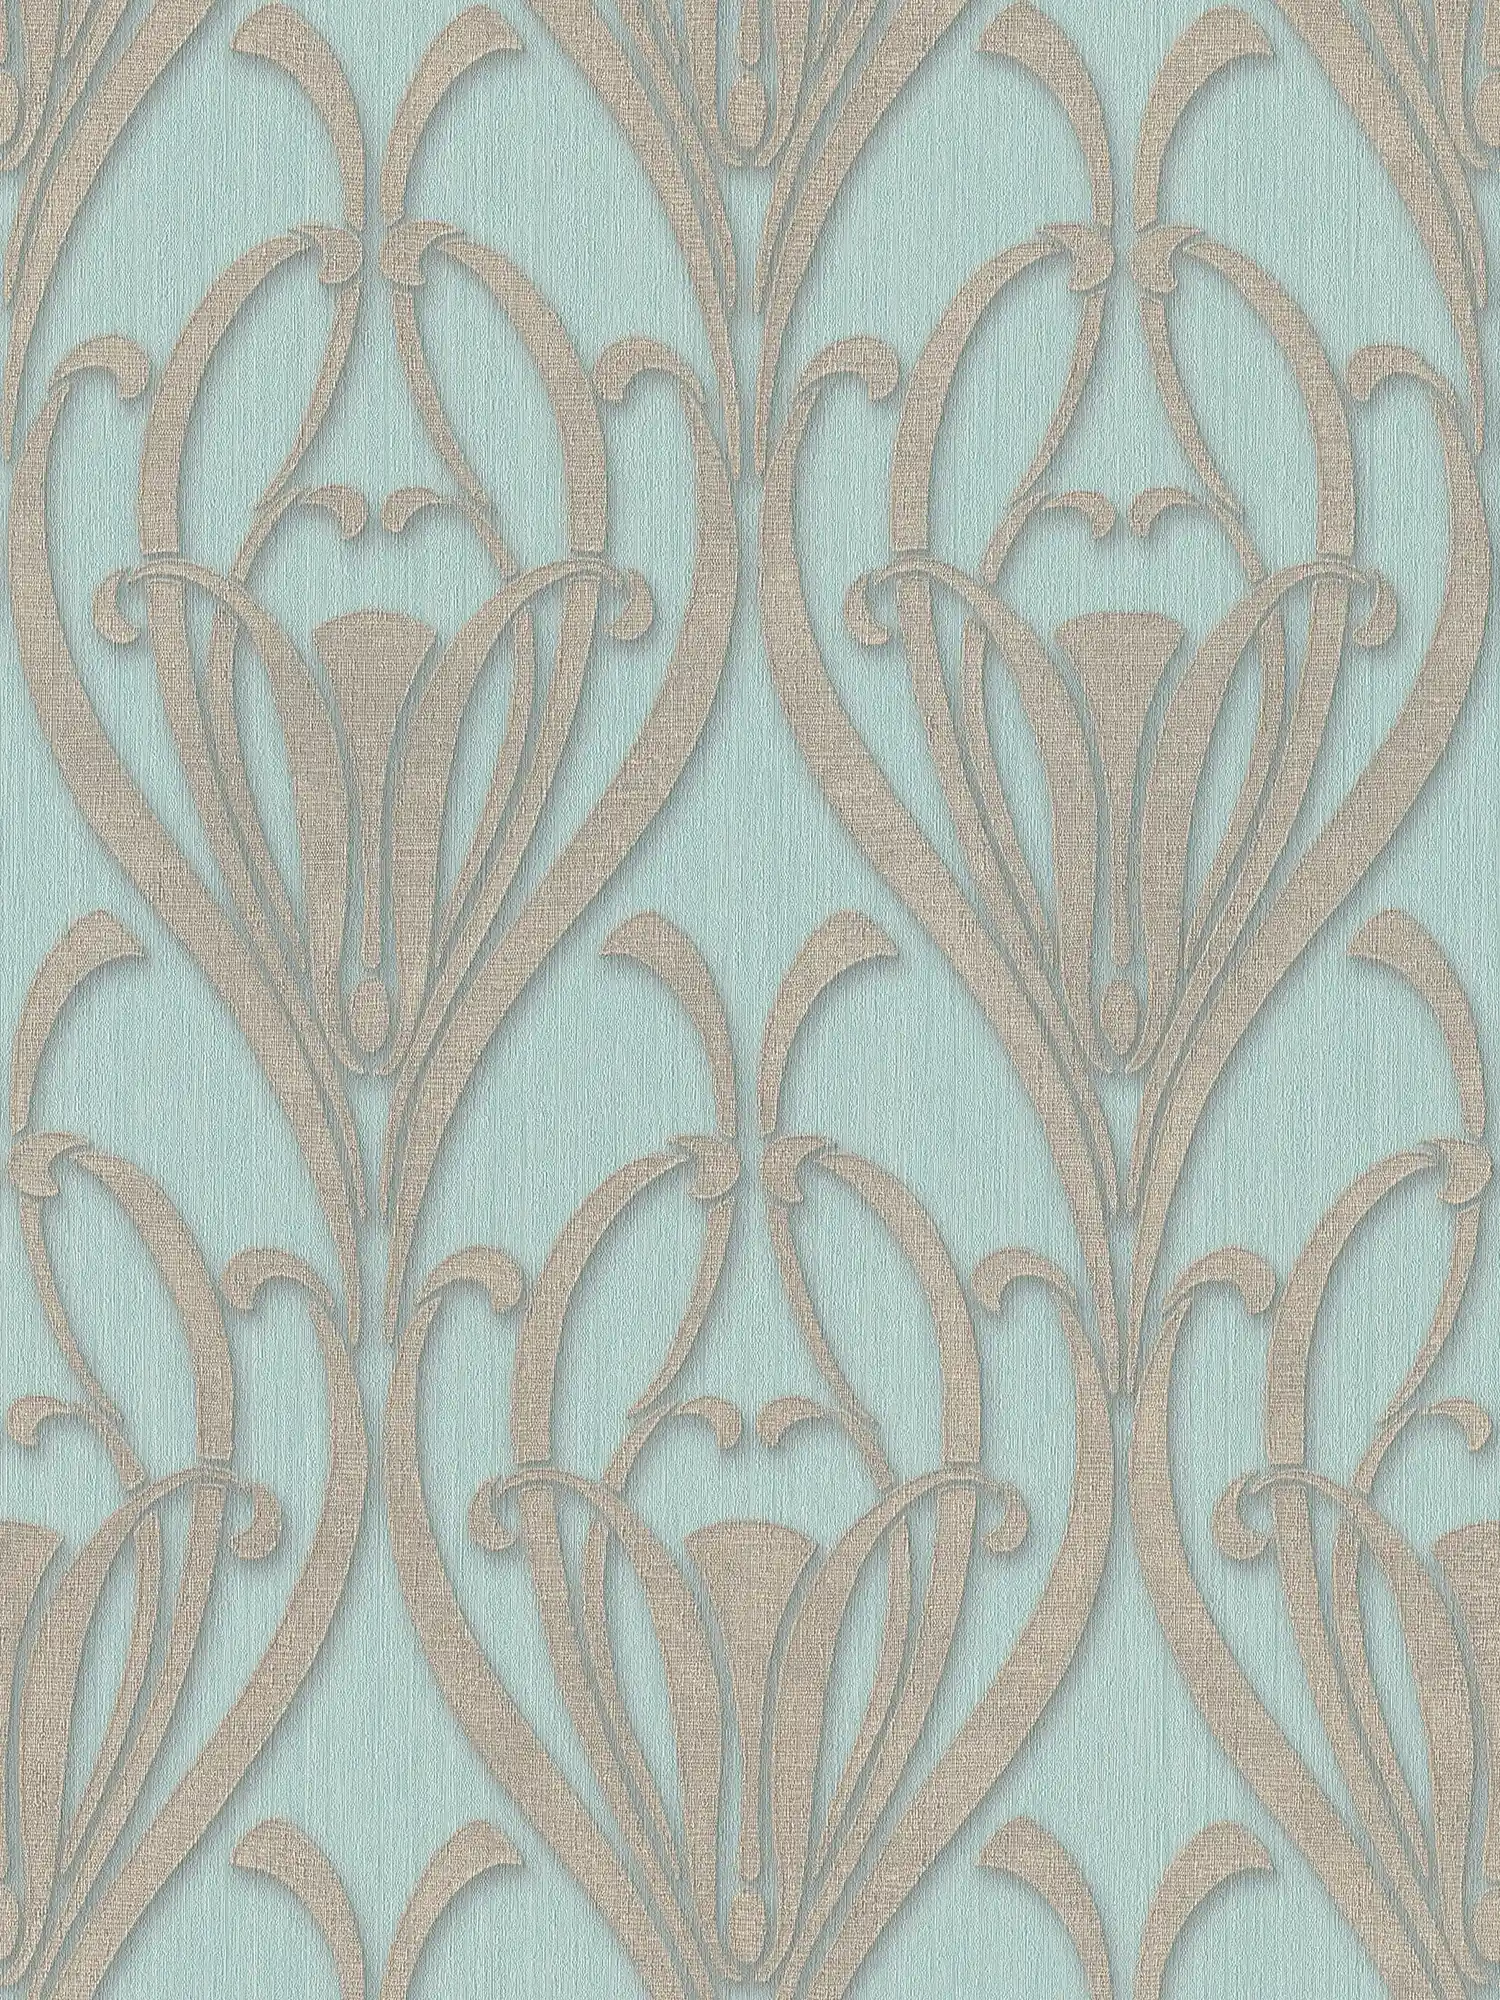         Mintgrüne Tapete Art Deco Muster mit Struktureffekt
    